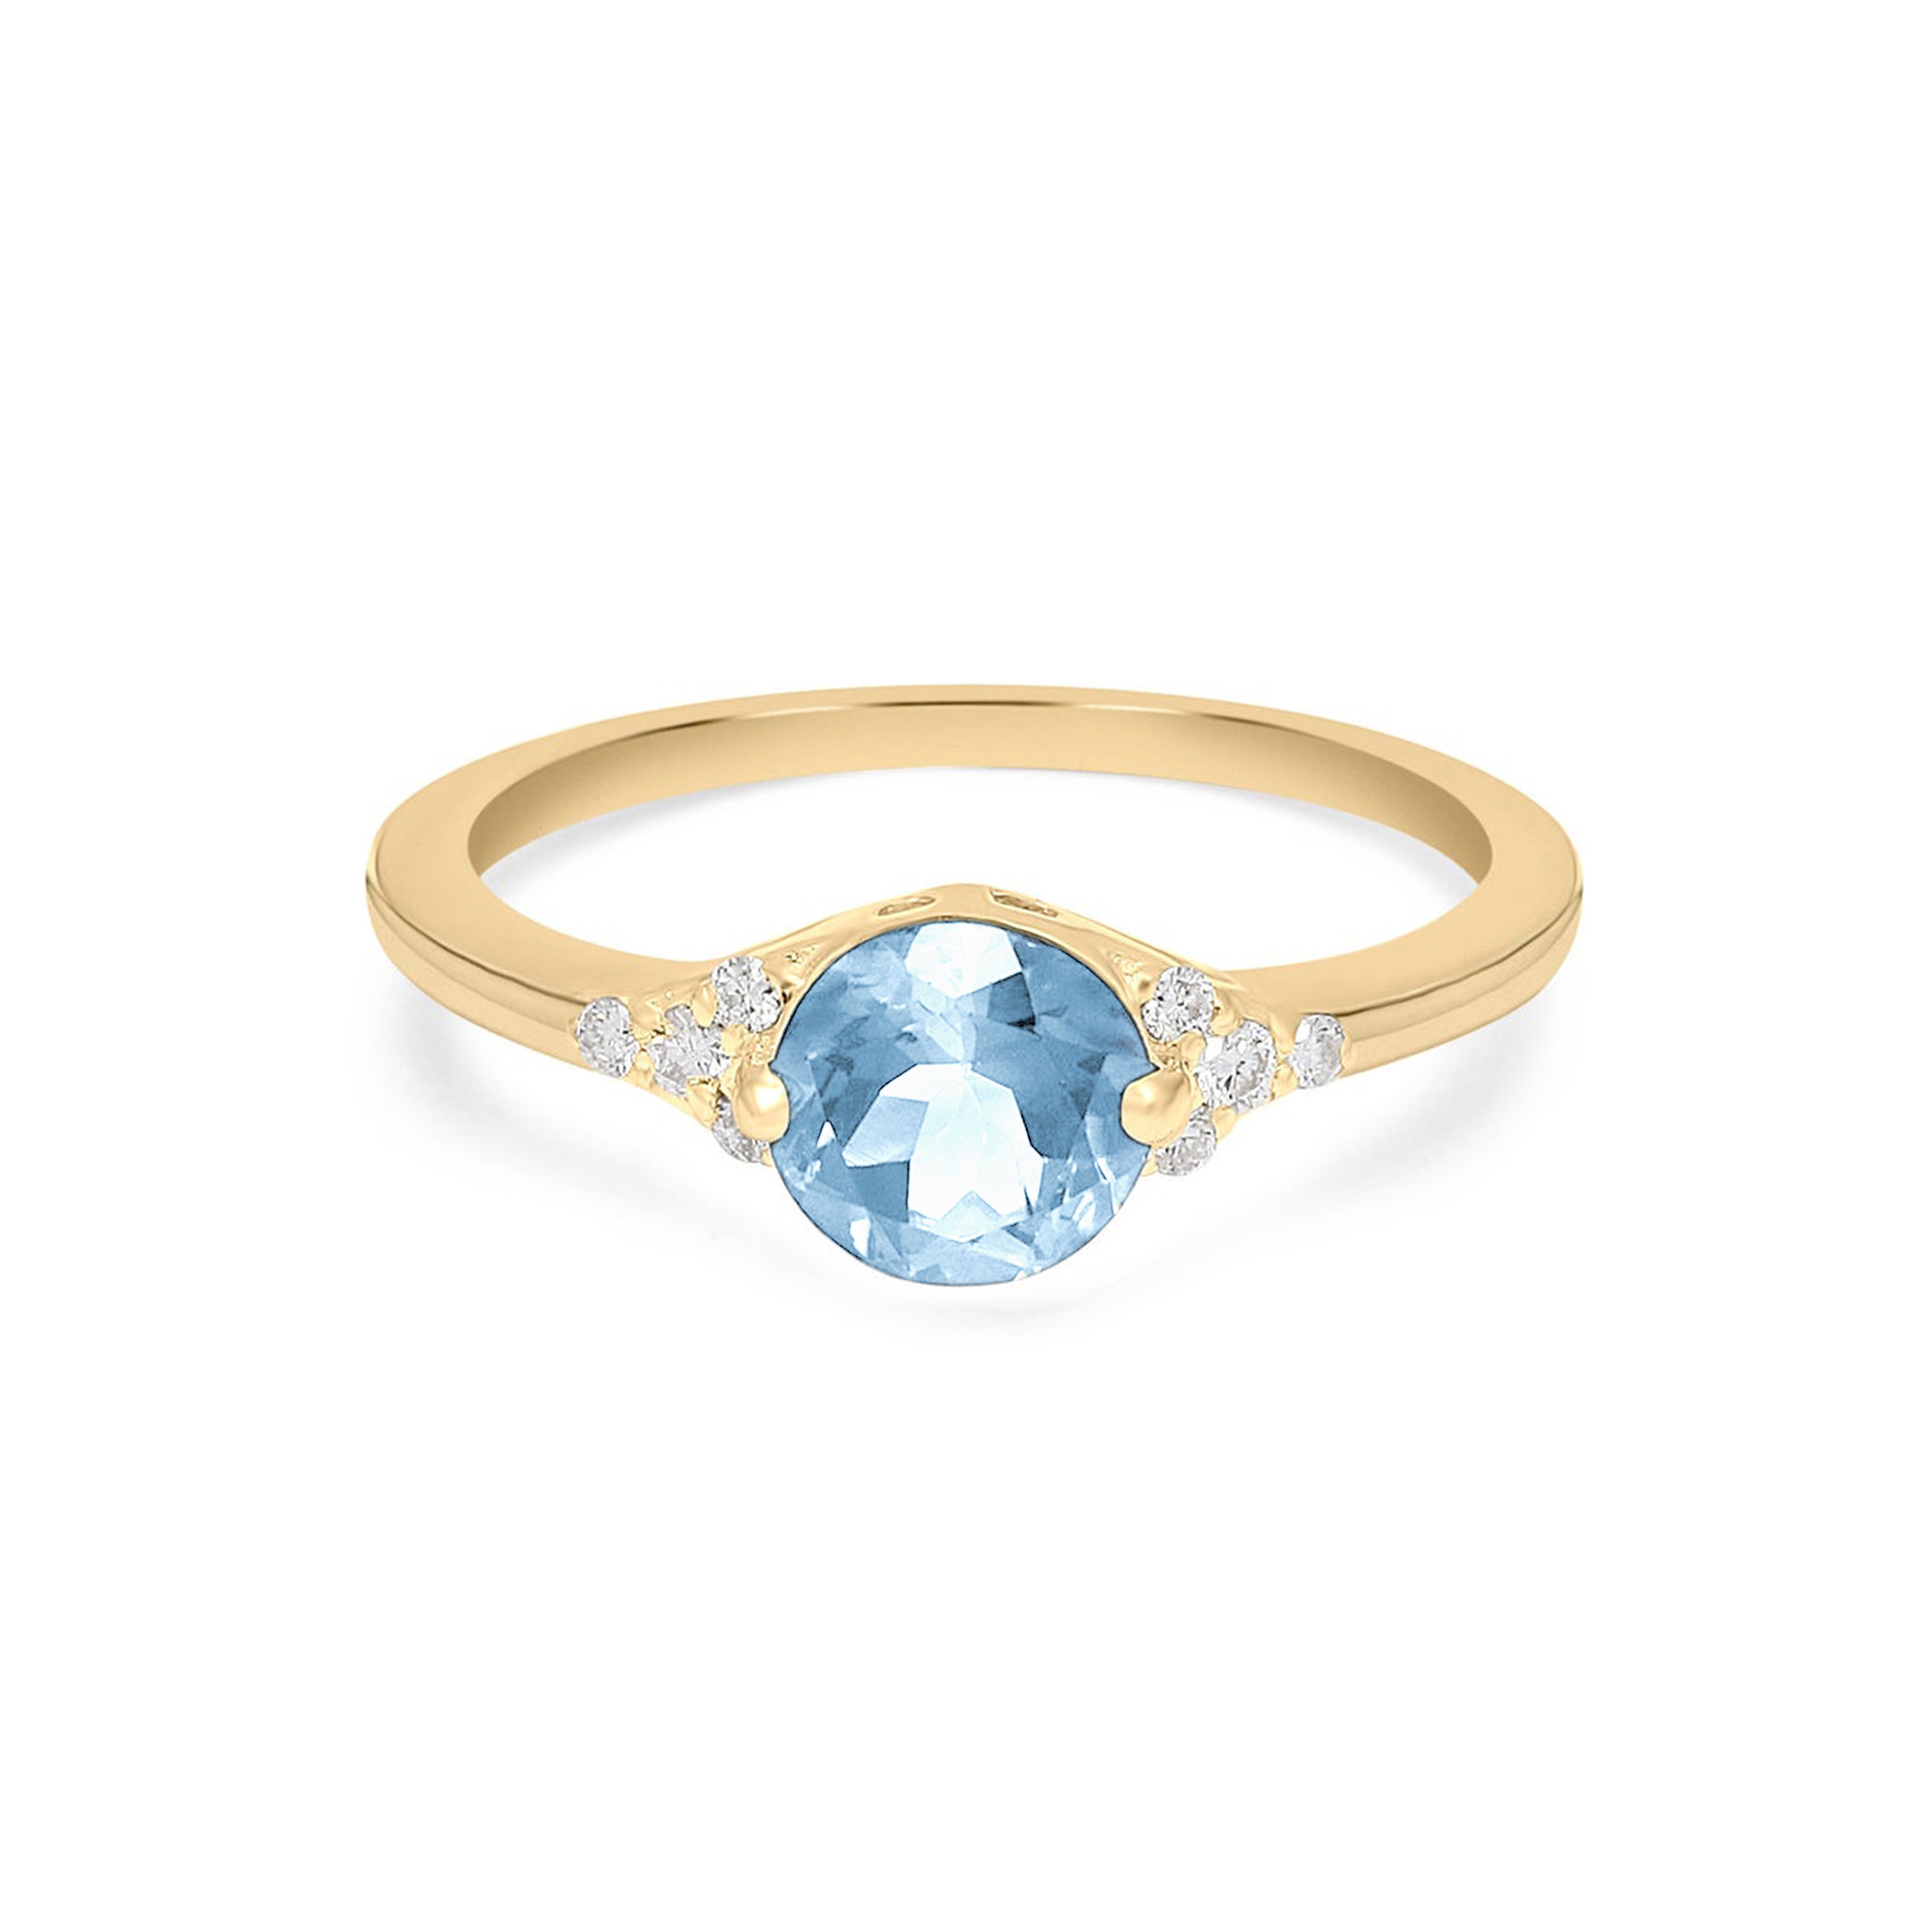 14k 18k Solid Gold Ring, Natural Aquamarine Ring, Diamond Halo Ring, Gift For Girl Friend, Gemstone Ring